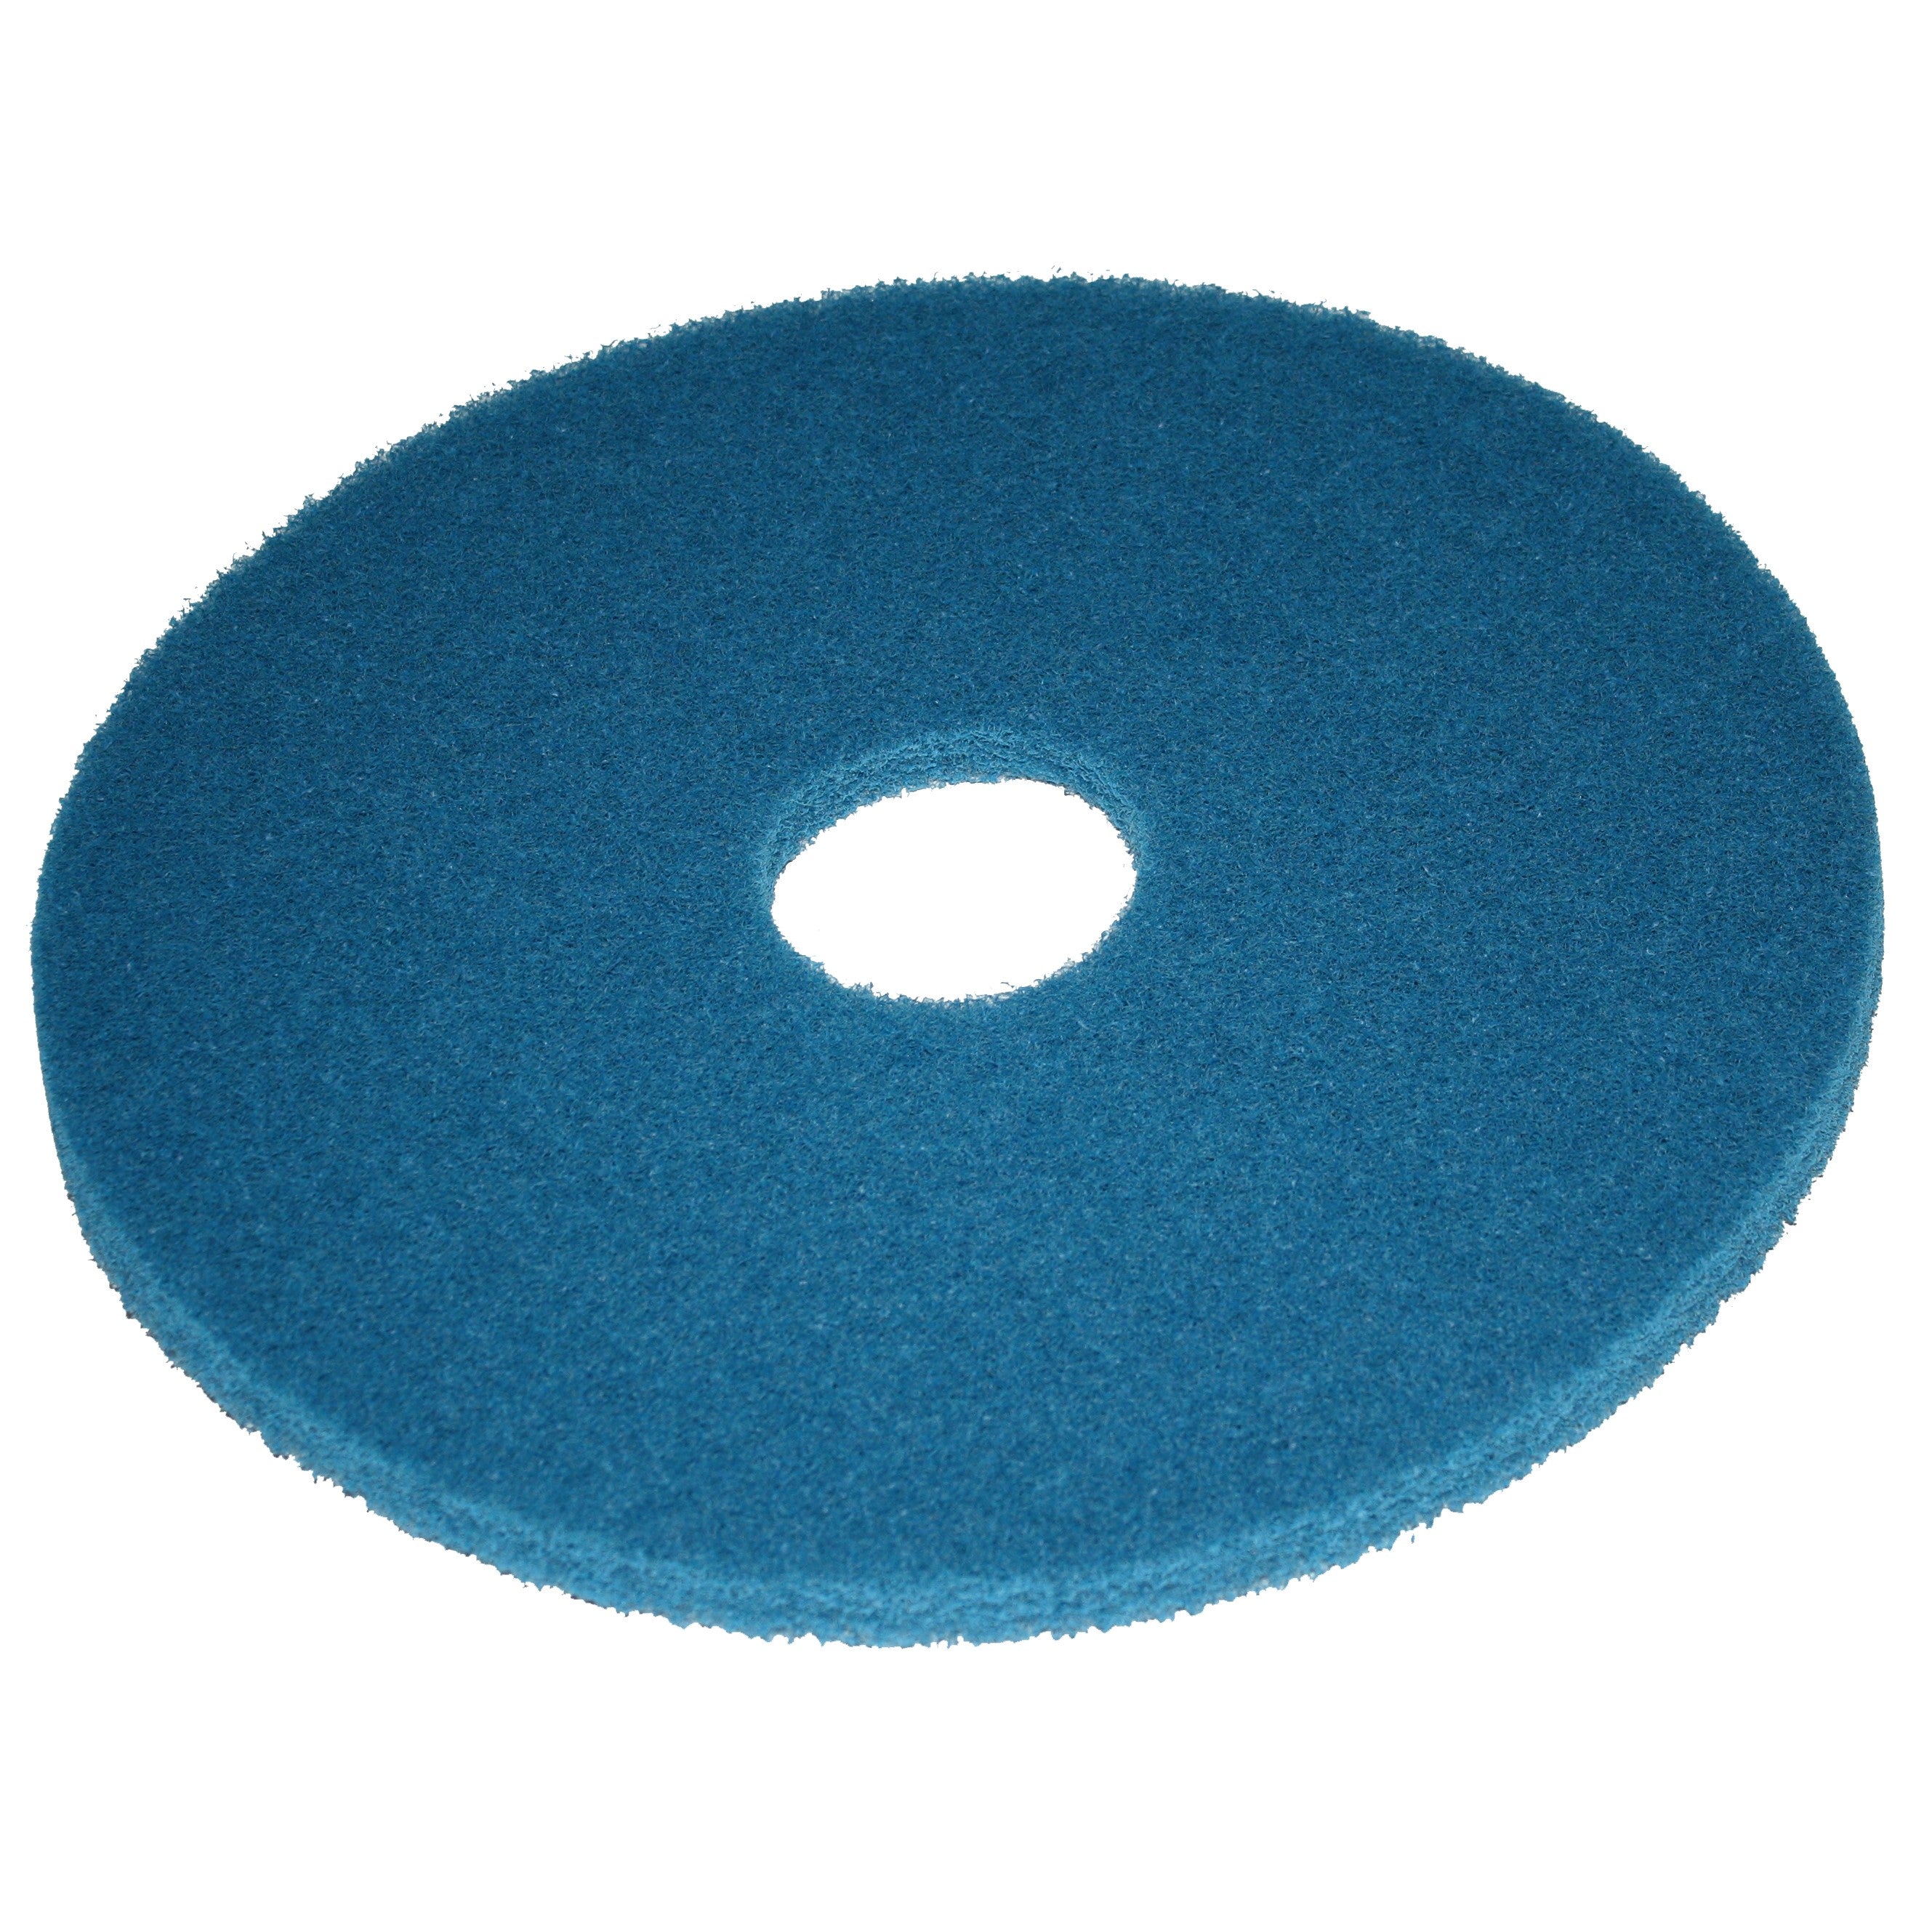 Pad blau, Ø 508 mm, Polyester